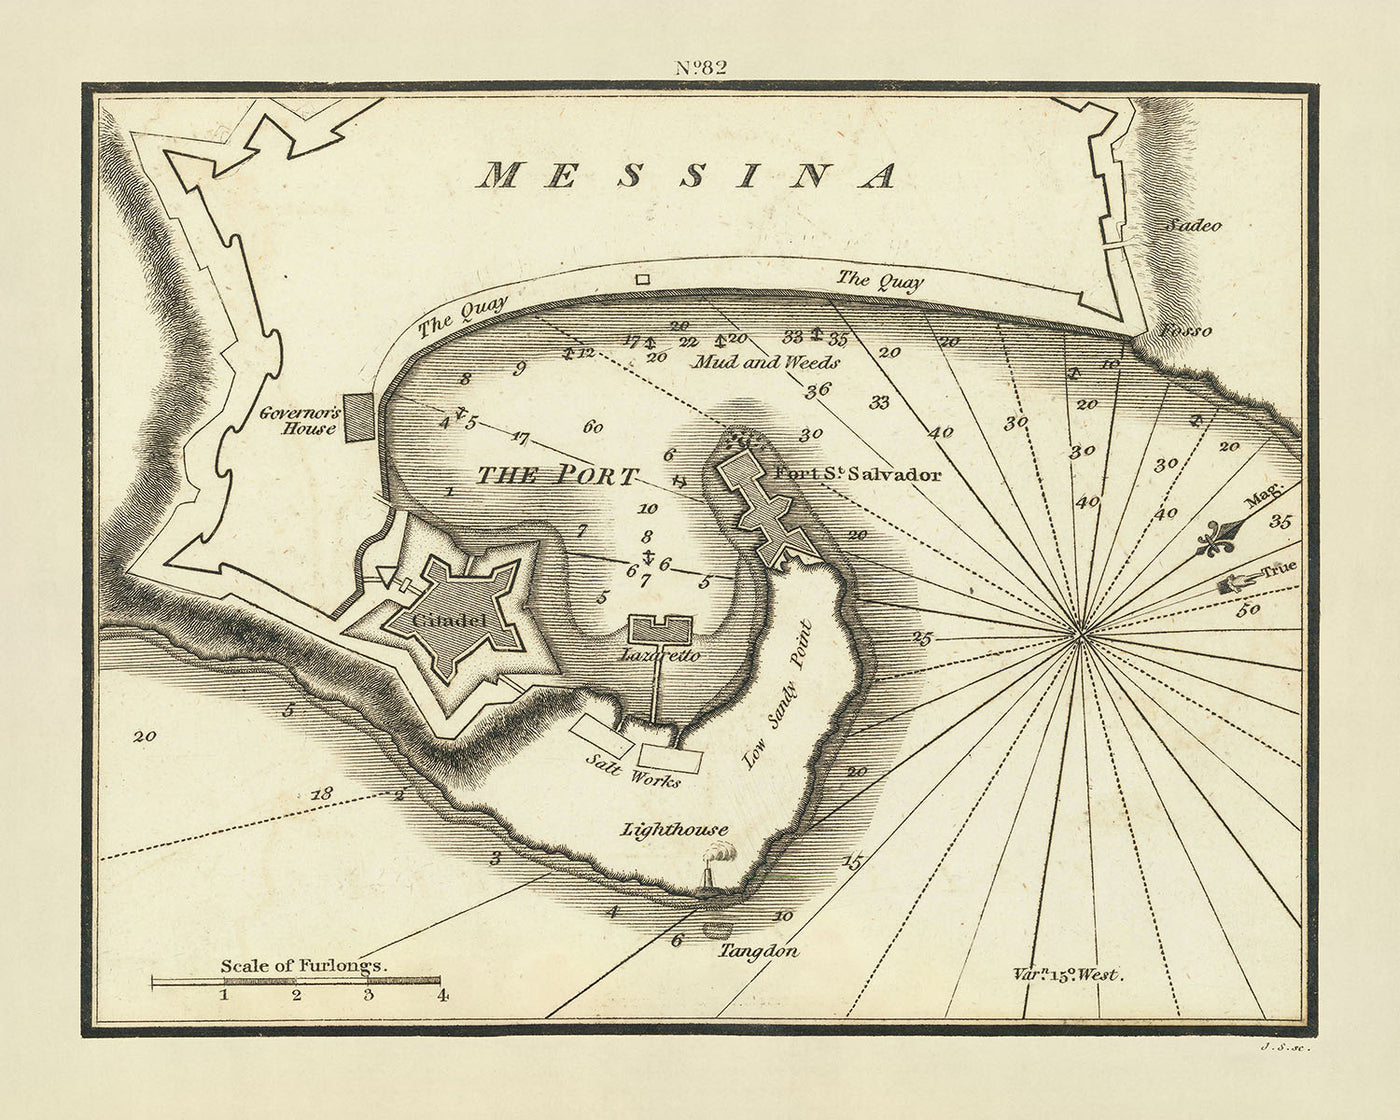 Old Messina, Sicily Nautical Chart by Heather, 1802: Citadel, Fort St. Salvador, Salt Works